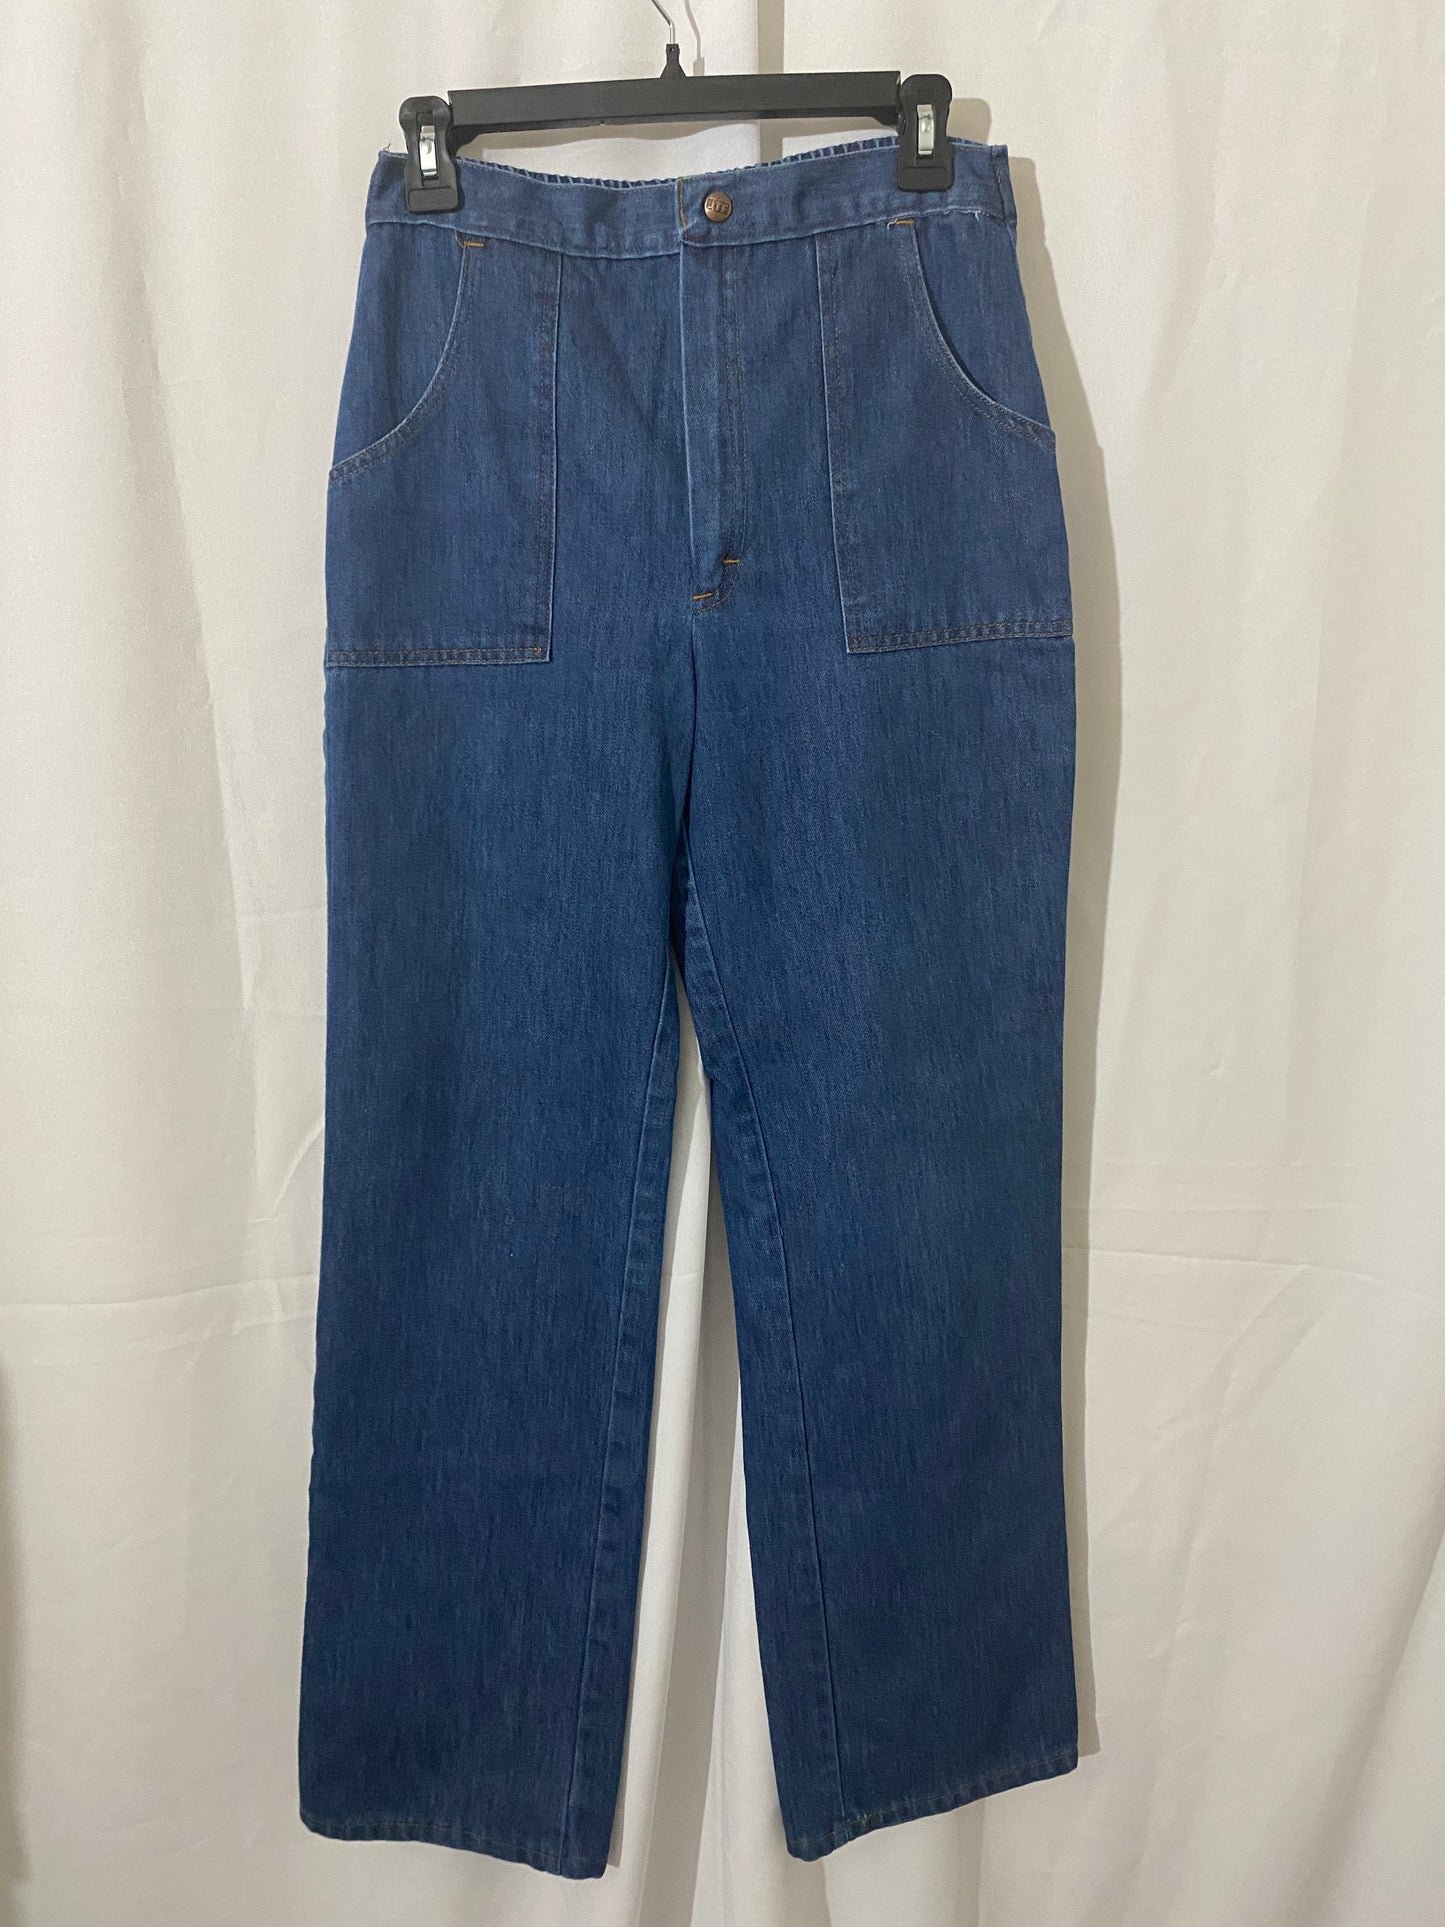 Vintage Sears Jeans